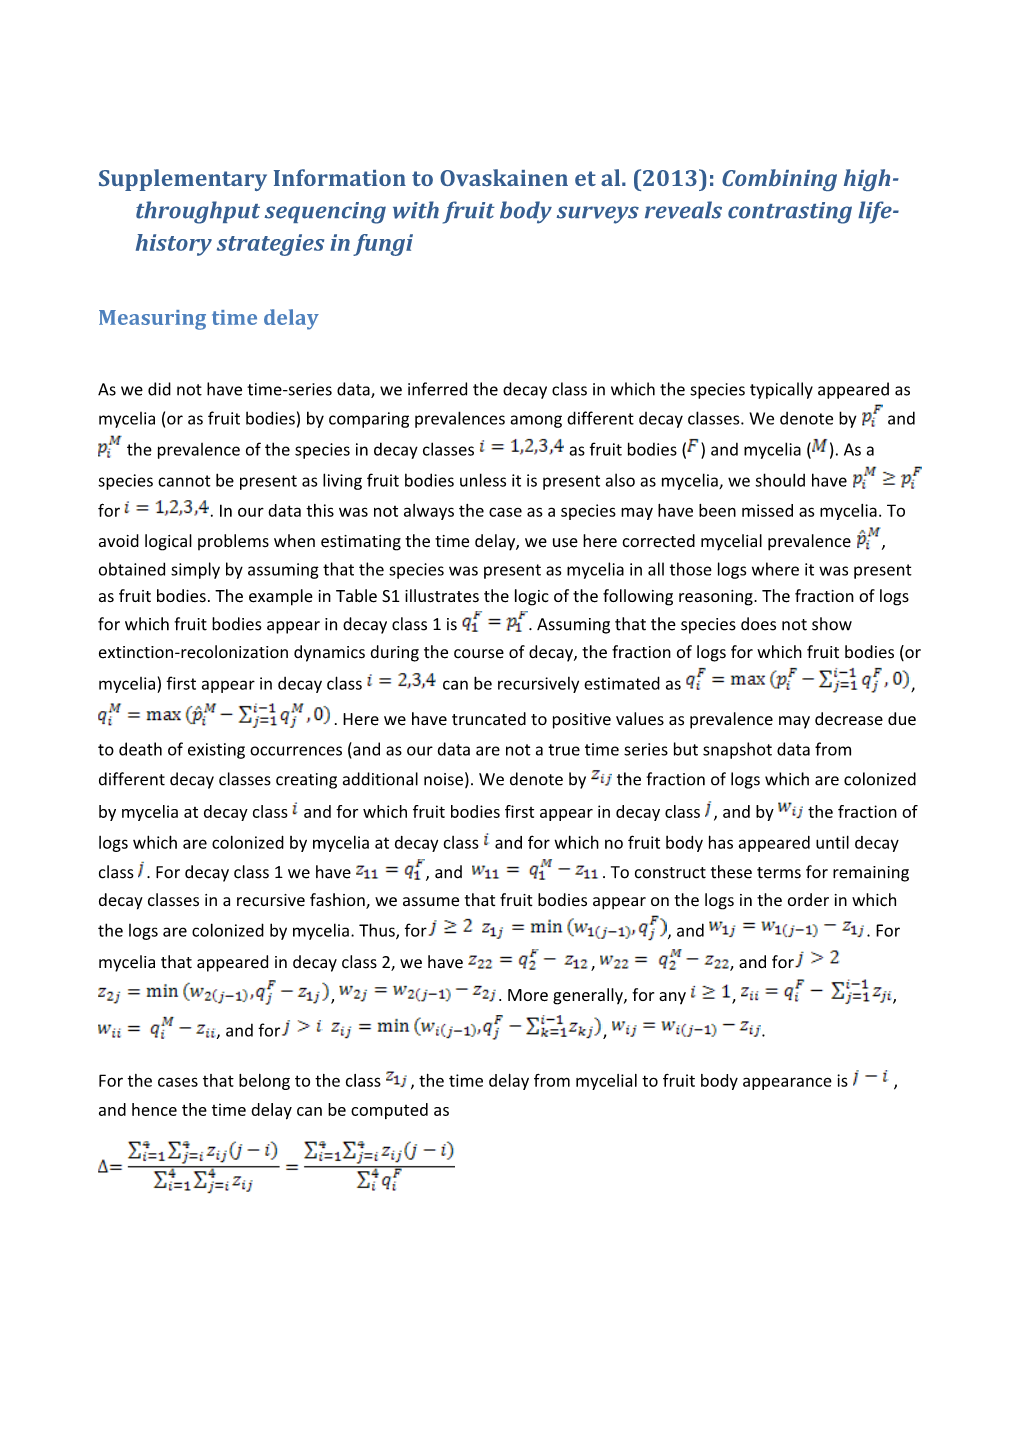 Supplementary Information to Ovaskainen Et Al. (2013): Combining High-Throughput Sequencing